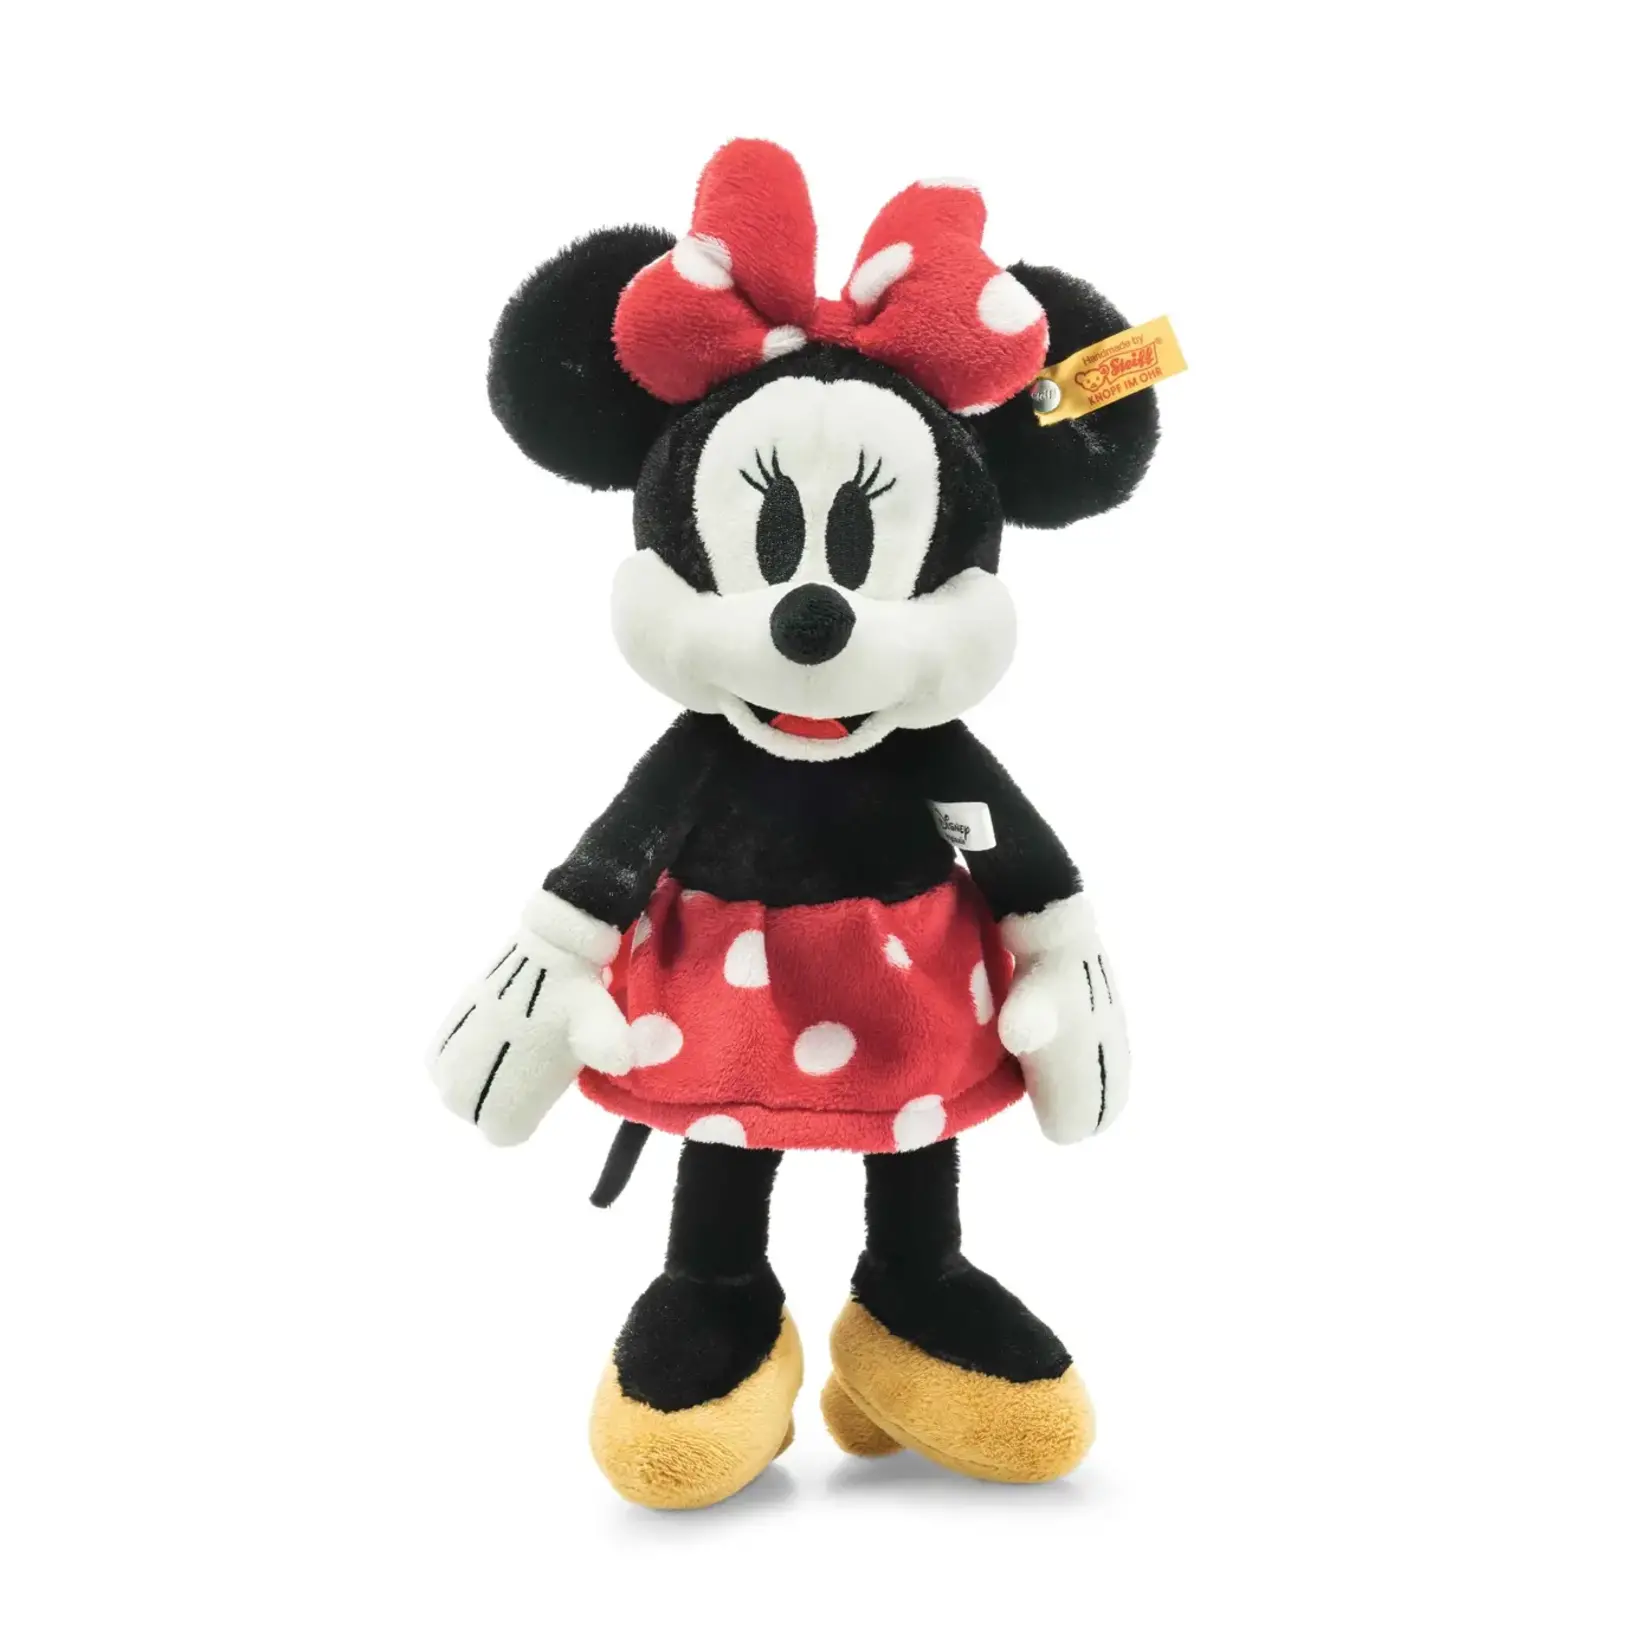 Steiff Disney's Minnie Mouse Stuffed Plush Toy, 12 Inches